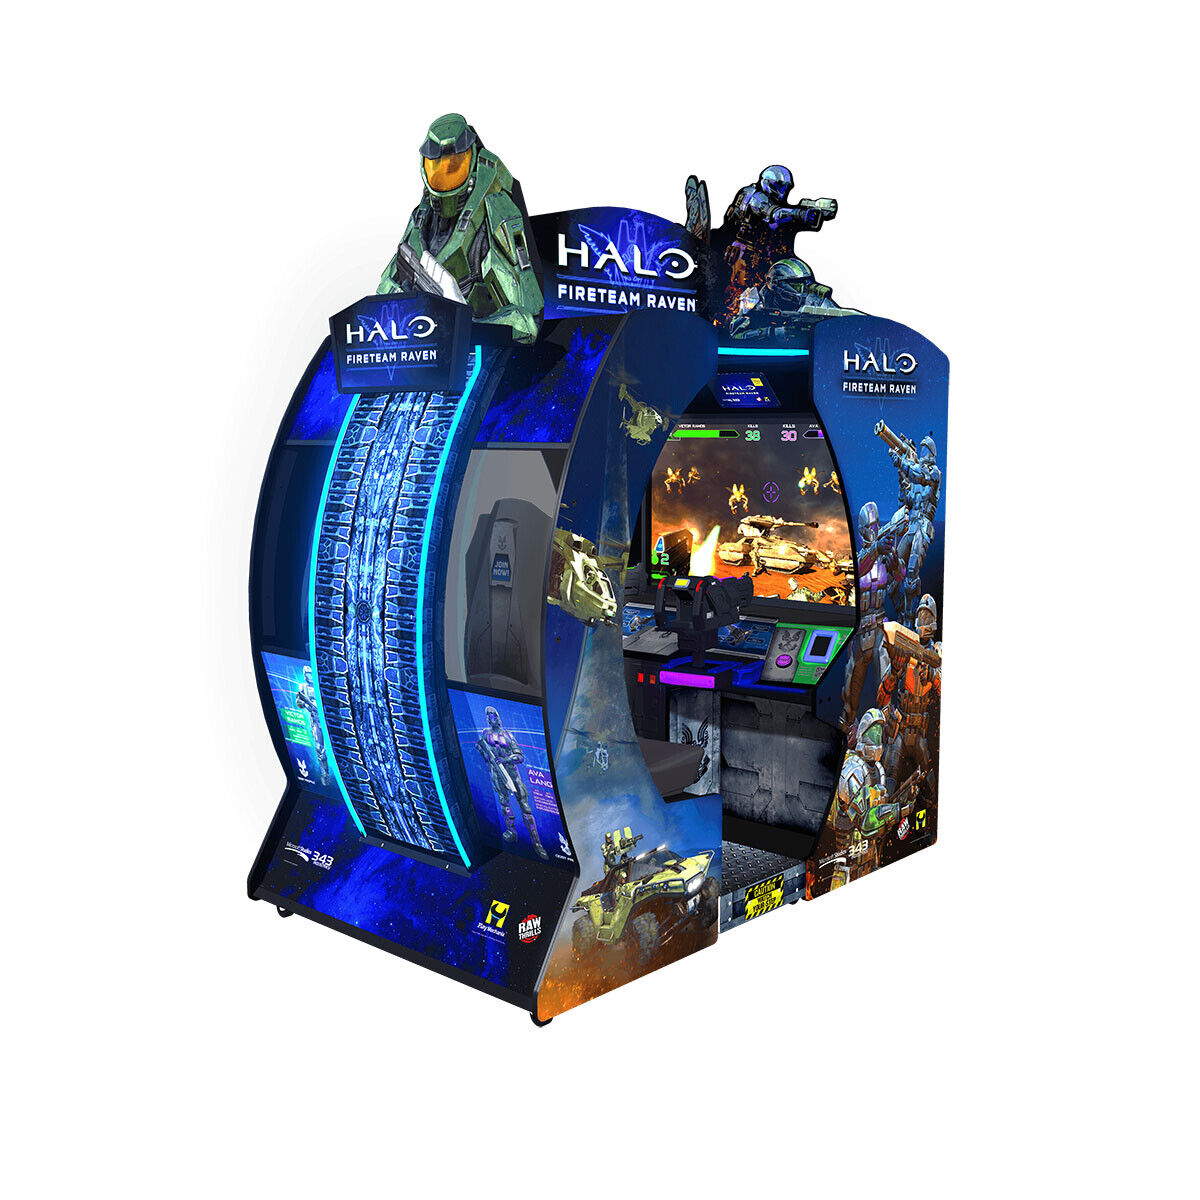 Halo: Fireteam Raven 2 Player Environmental Edition Arcade Game